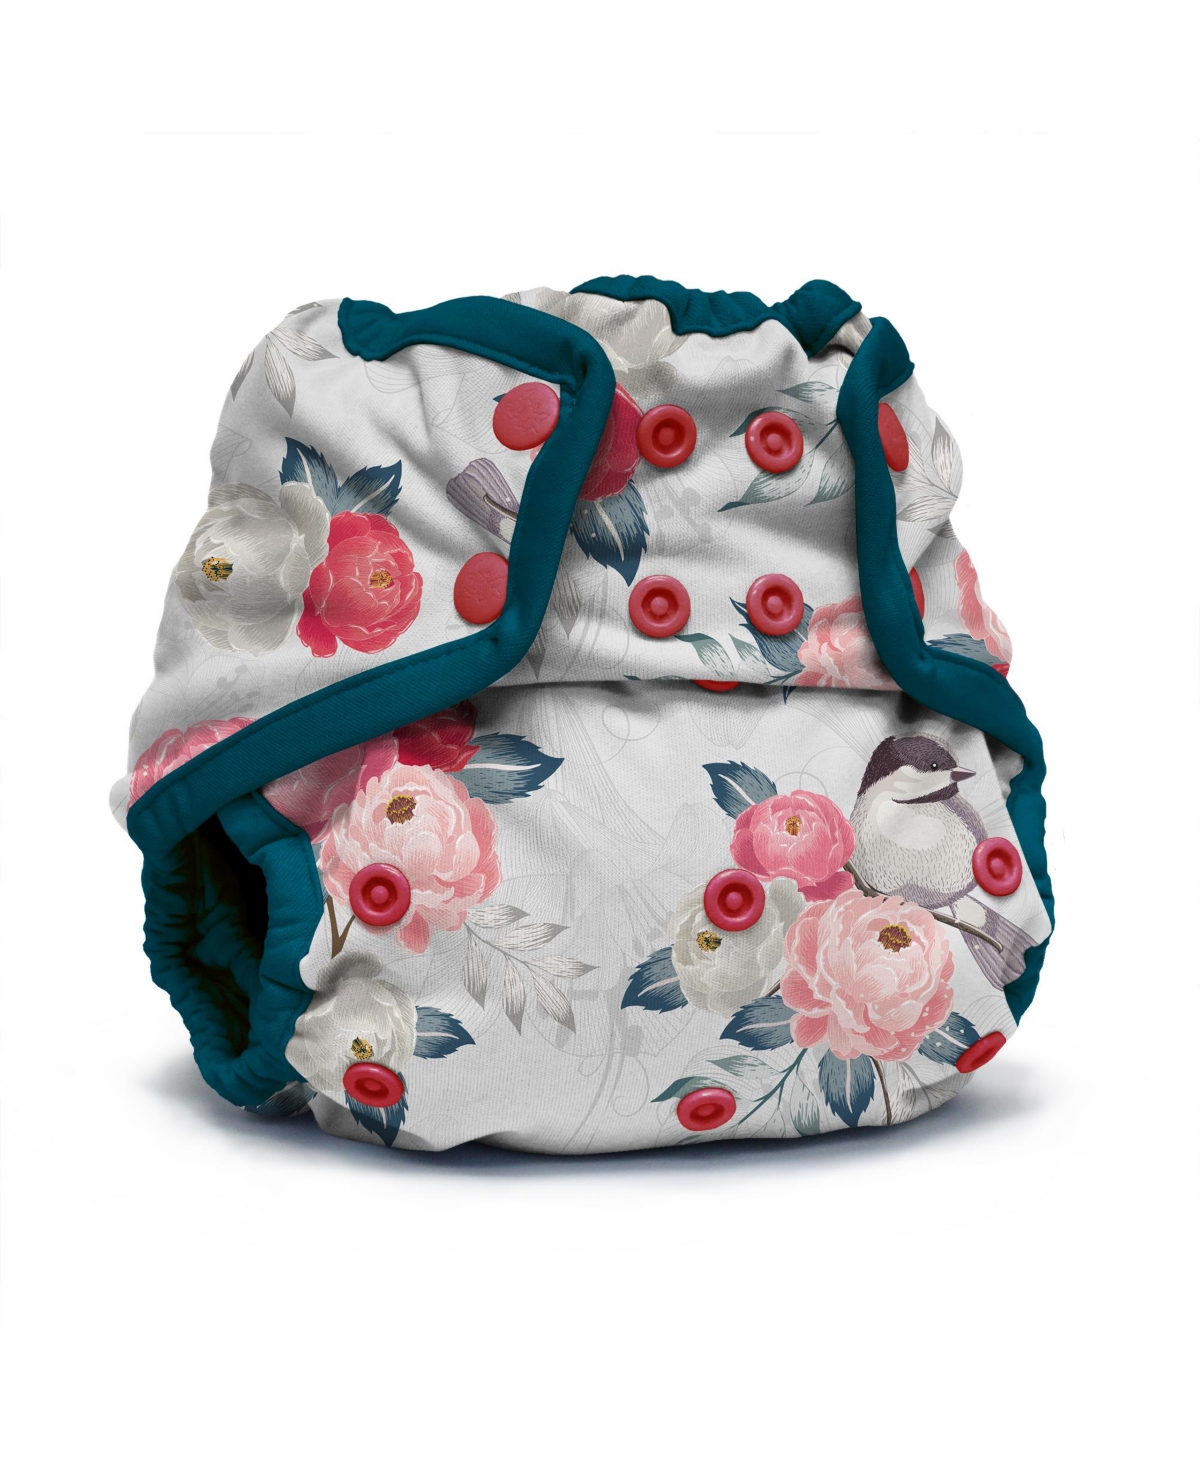 Kanga Care Babies' Rumparooz Reusable One Size Cloth Diaper Cover Snap In Multi